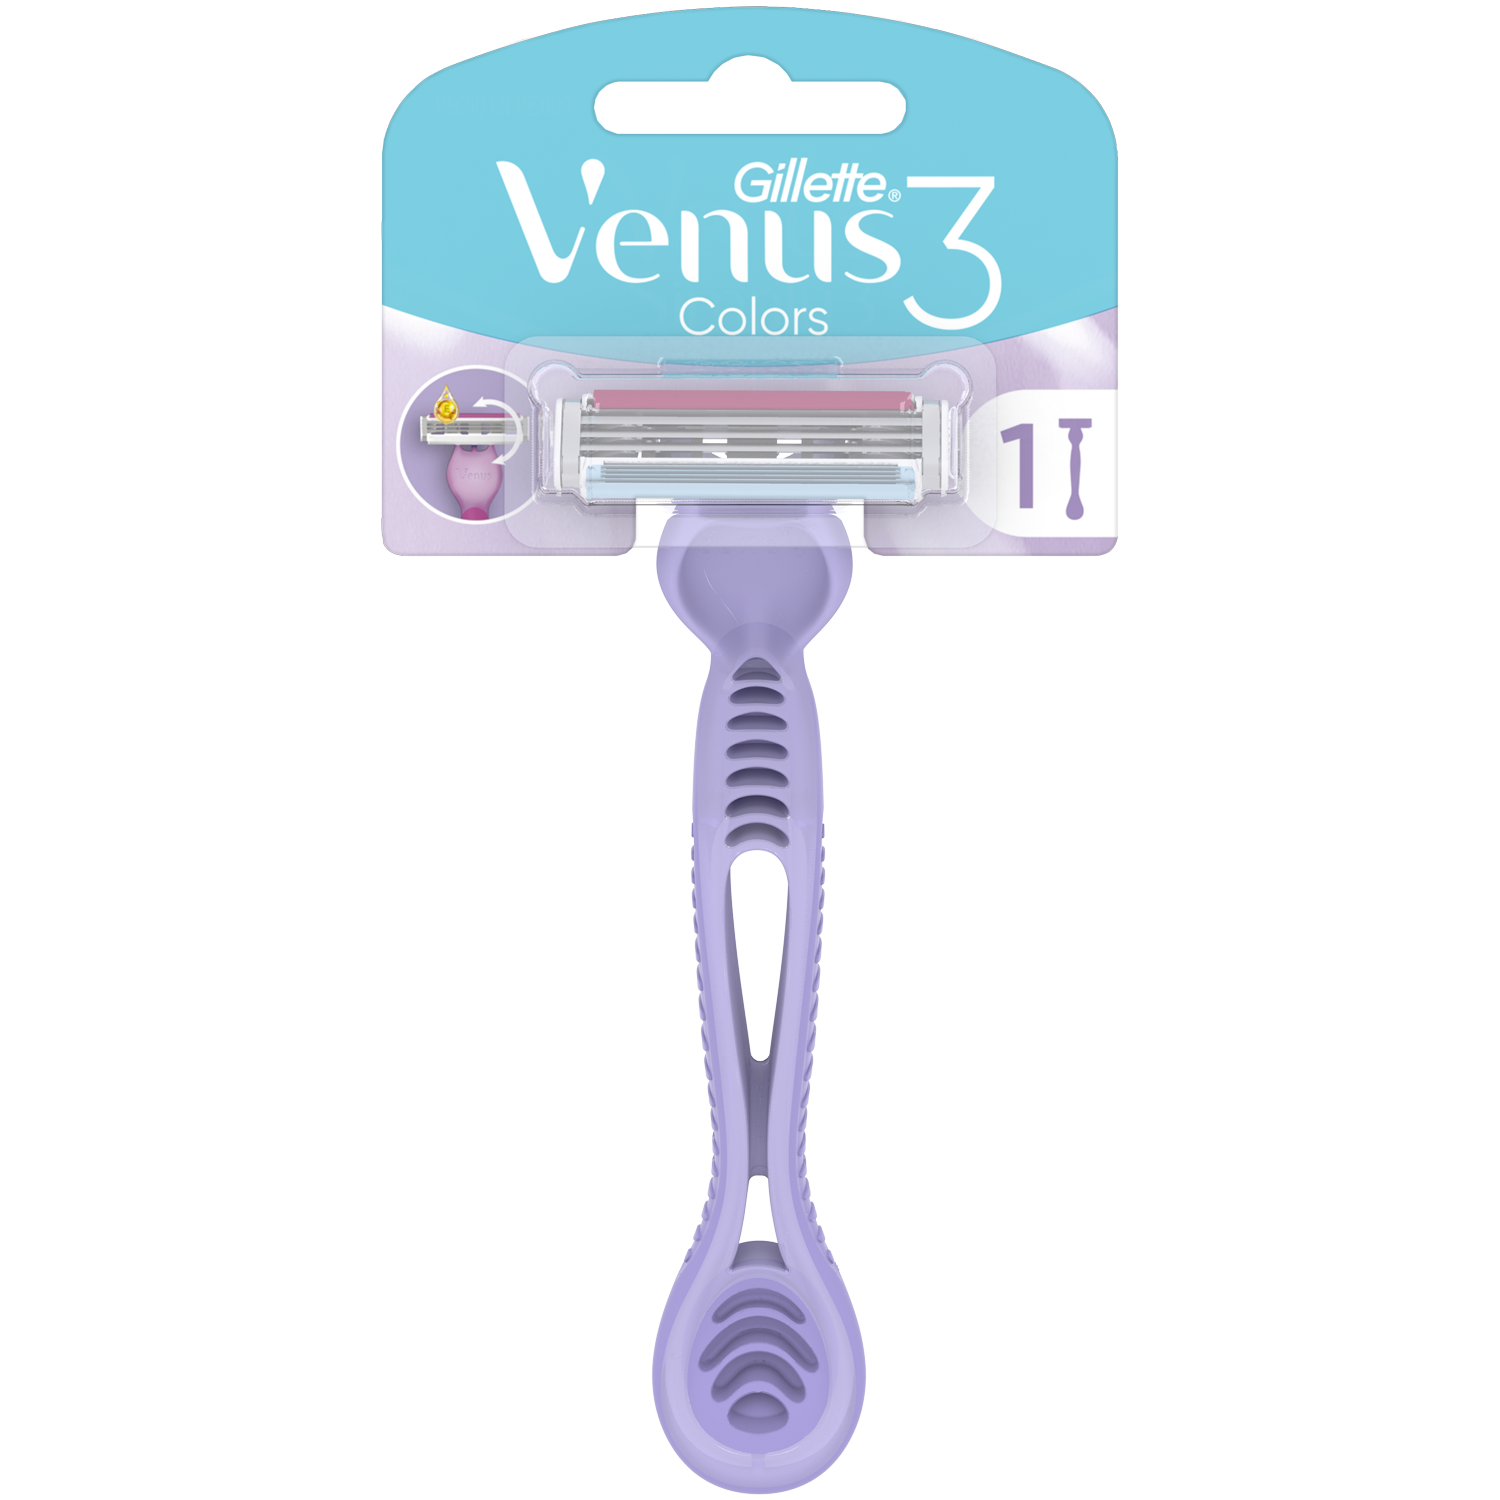 Gillette Venus женская одноразовая бритва, 1 шт. одноразовая женская бритва gillette venus 2 4 шт